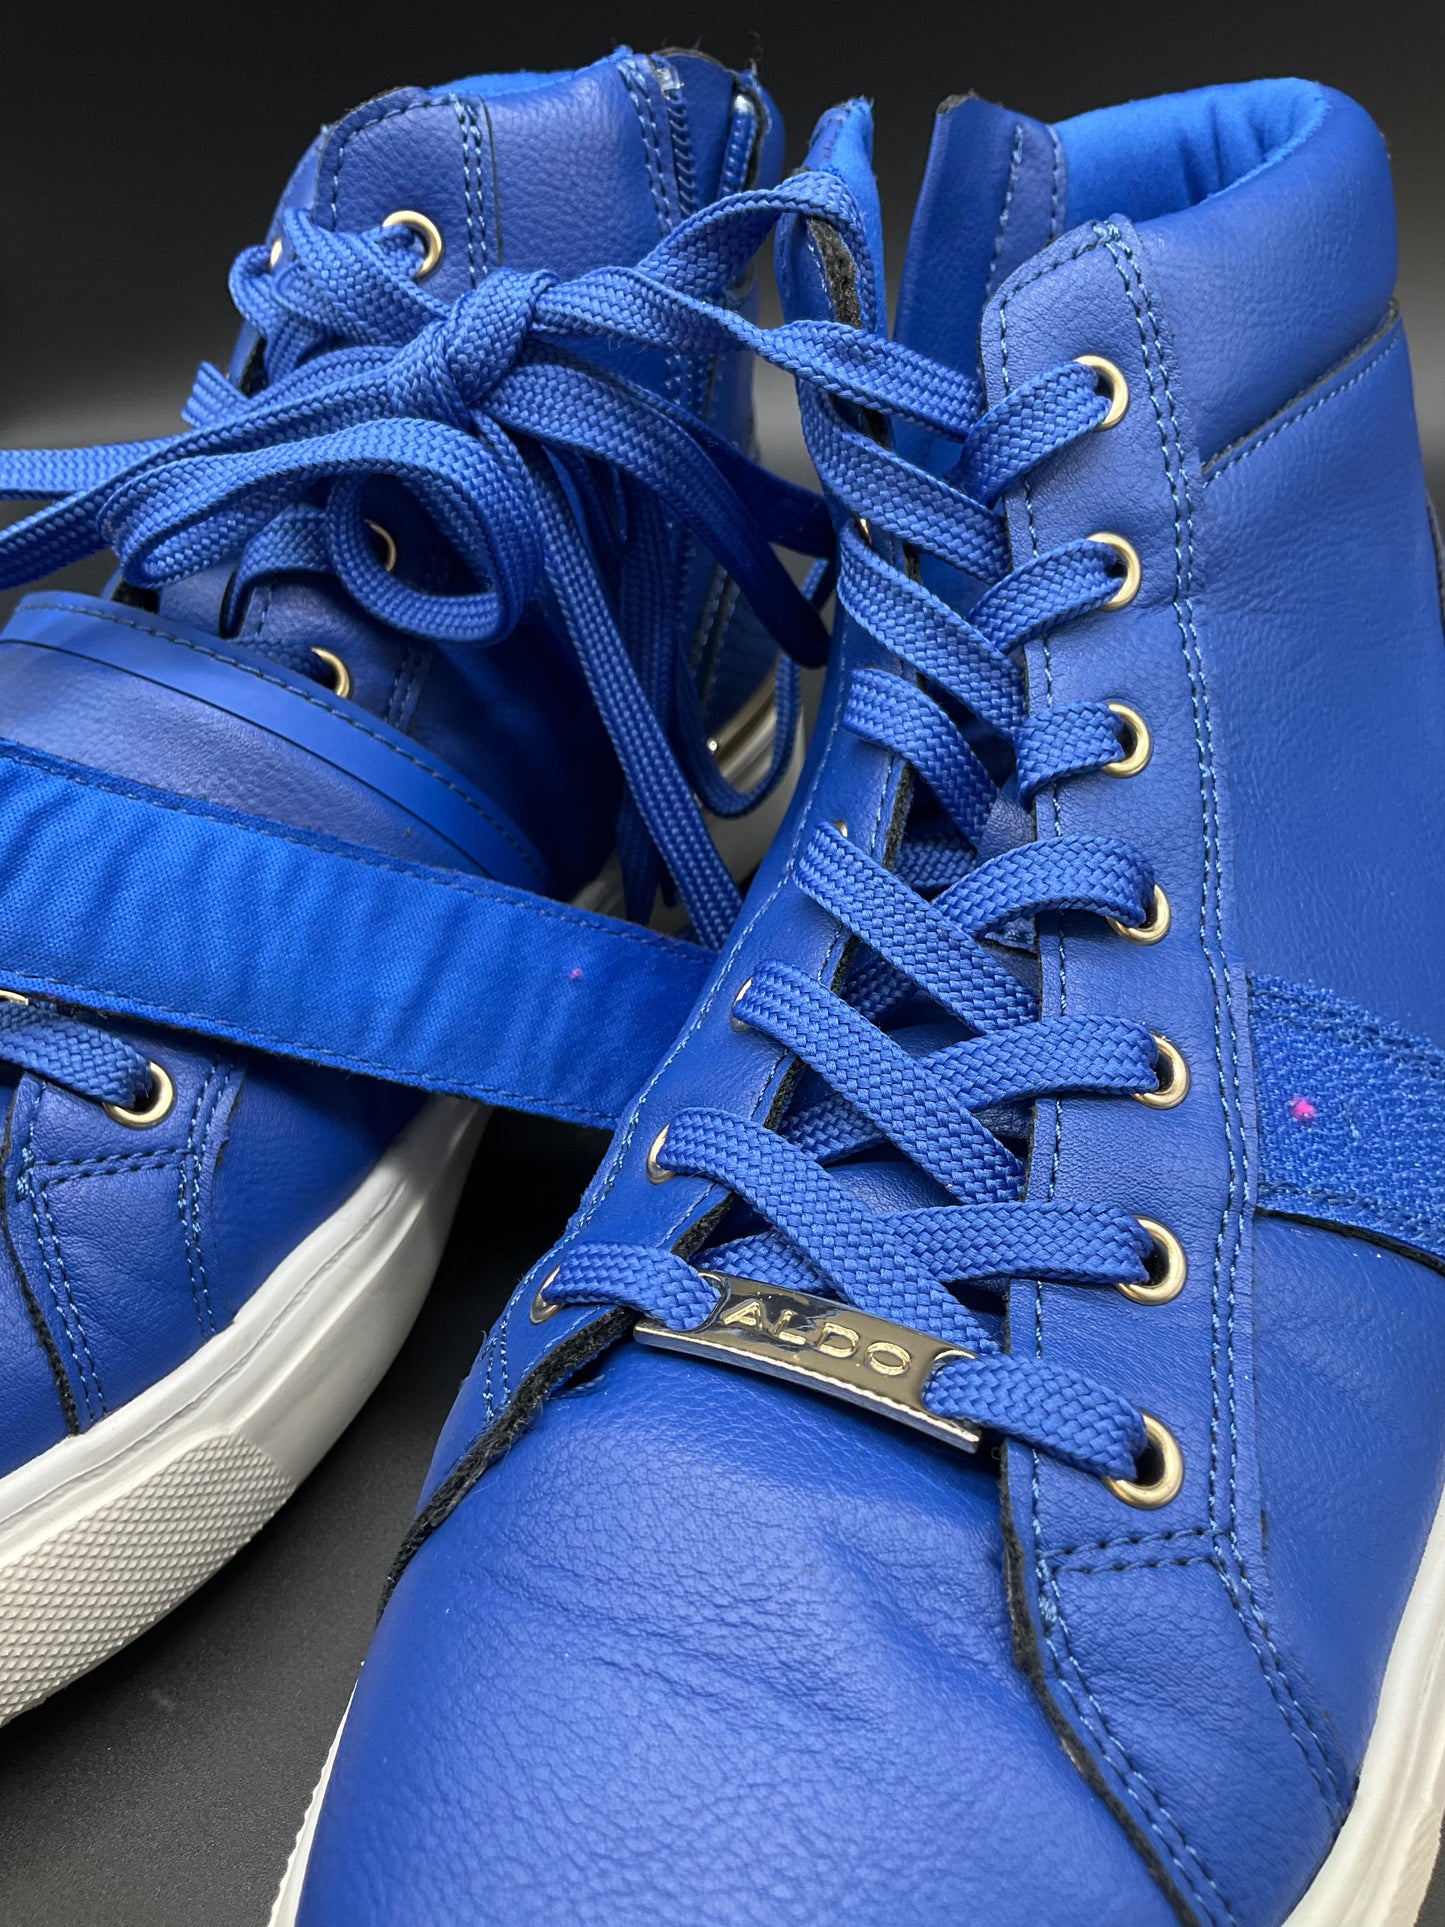 Aldo Halenna Blue High Top Sneakers Size 6